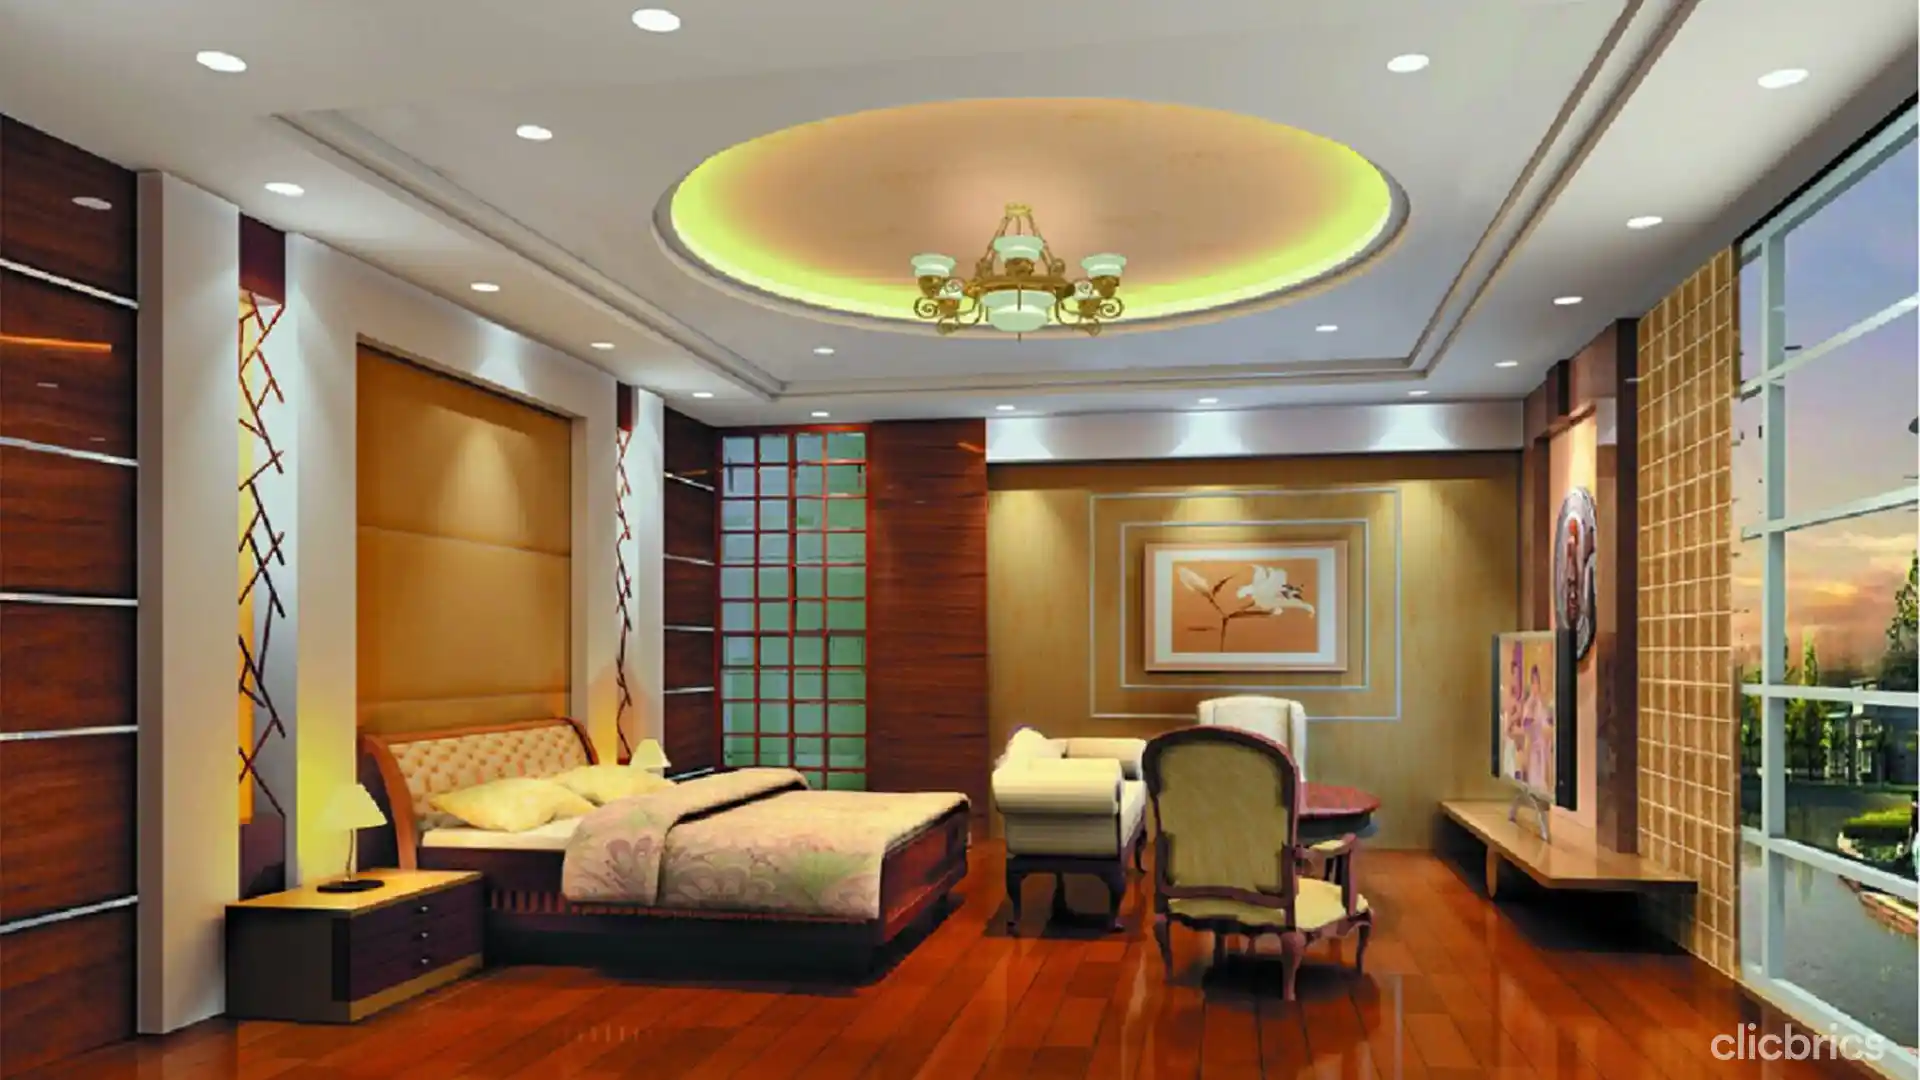  1662702263849 False Ceiling Design For Bedroom Make Use Of Circular Designer Ceilings.webp